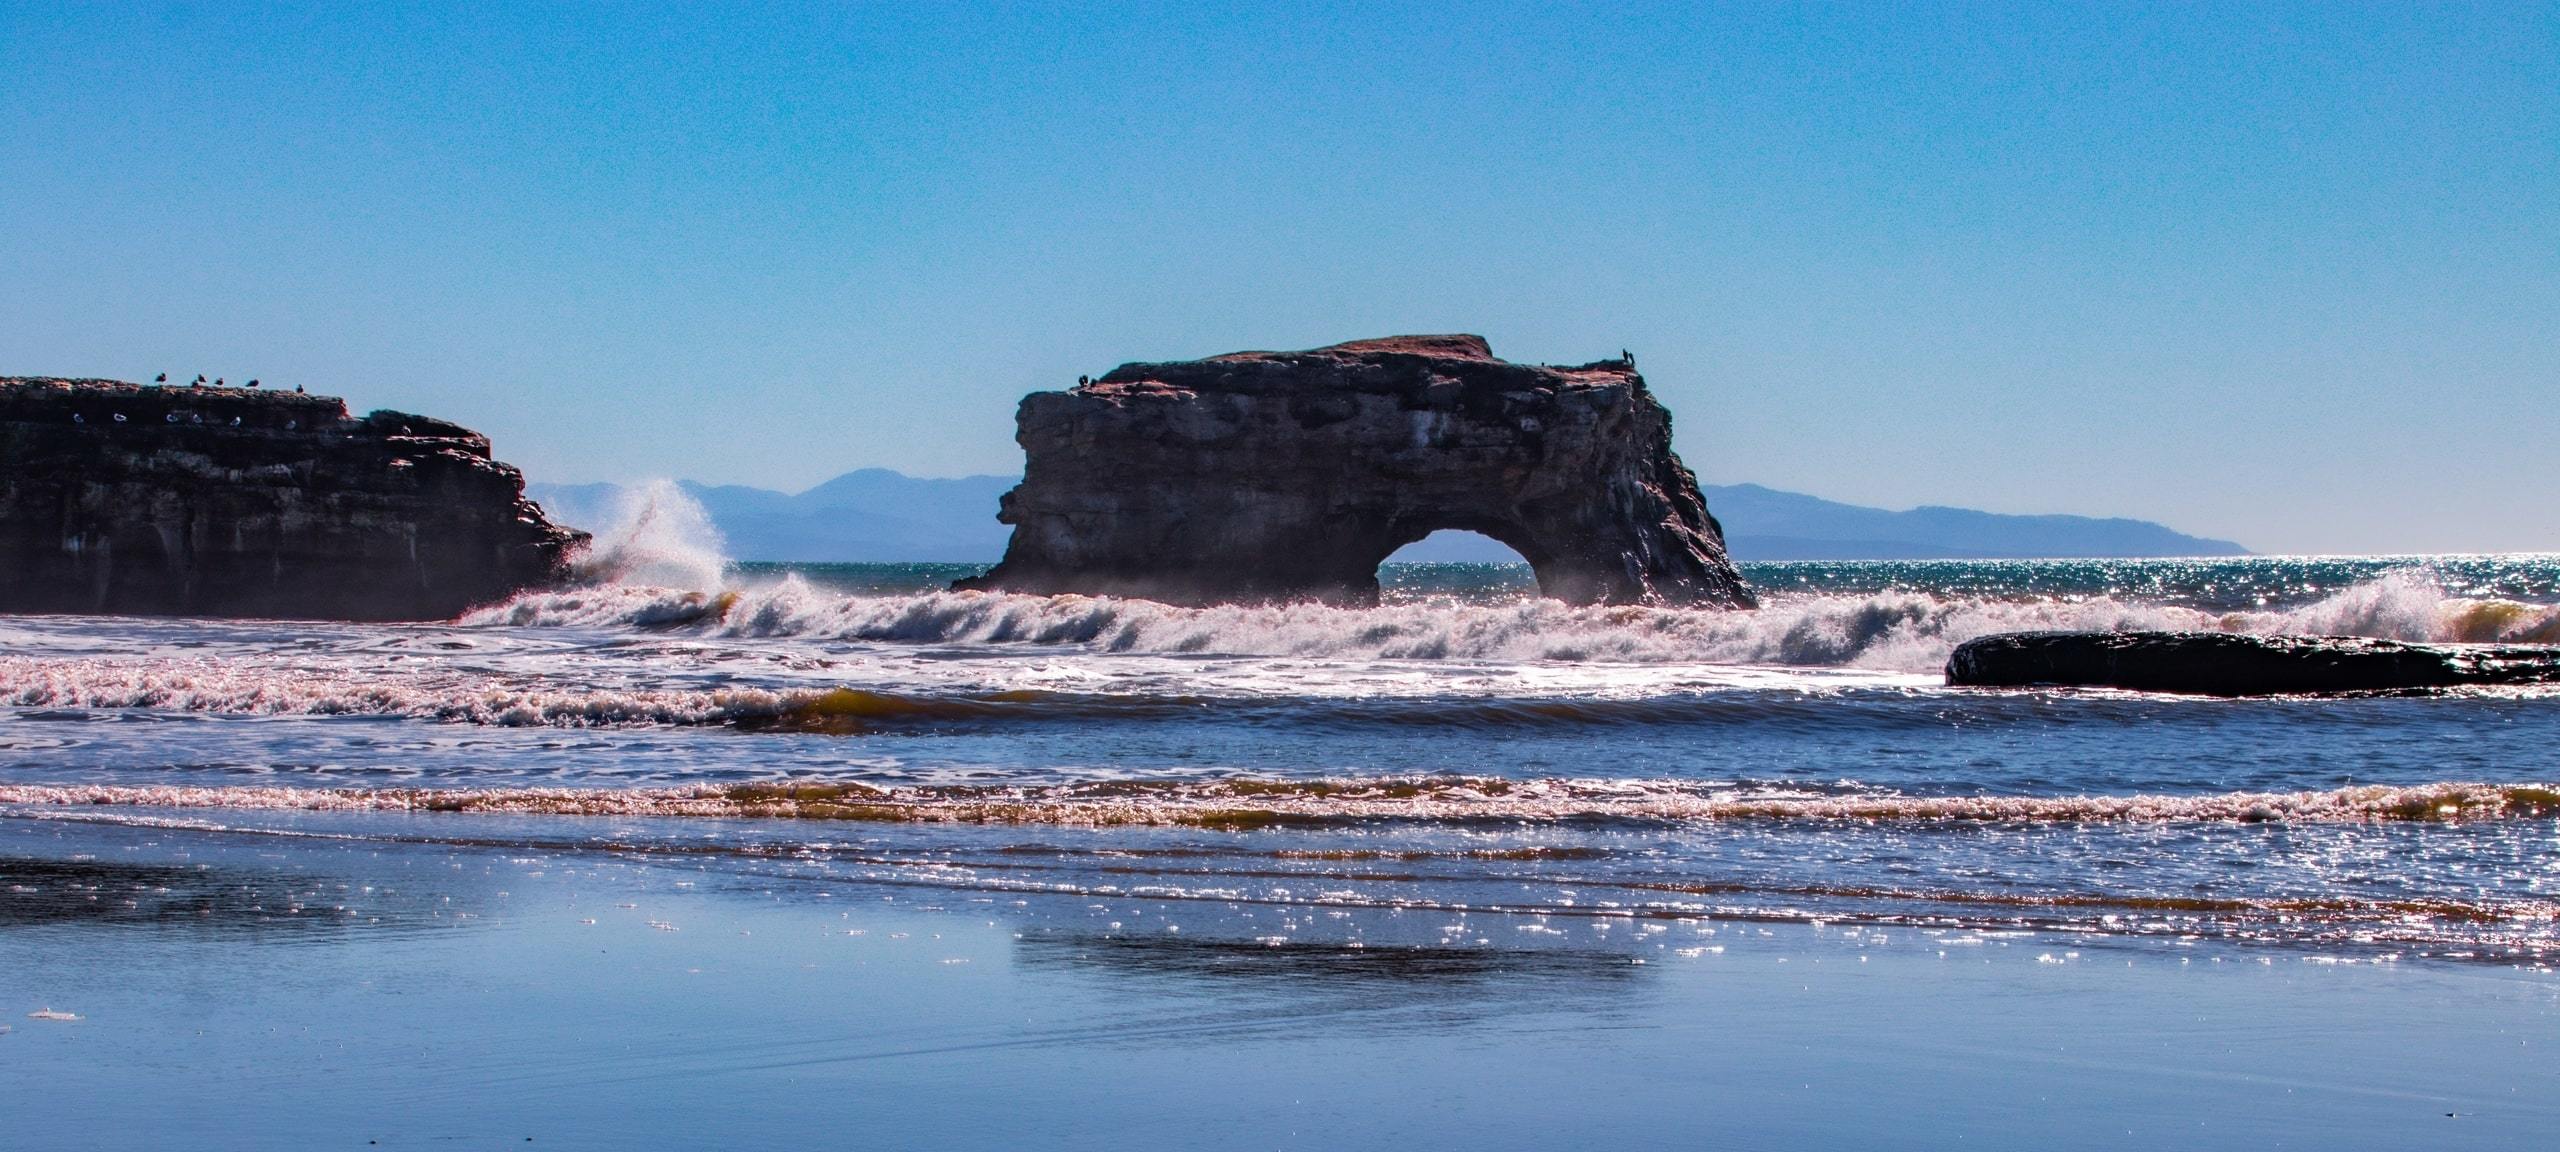 Rock formations on Santa Cruz, CA coast during afternoon